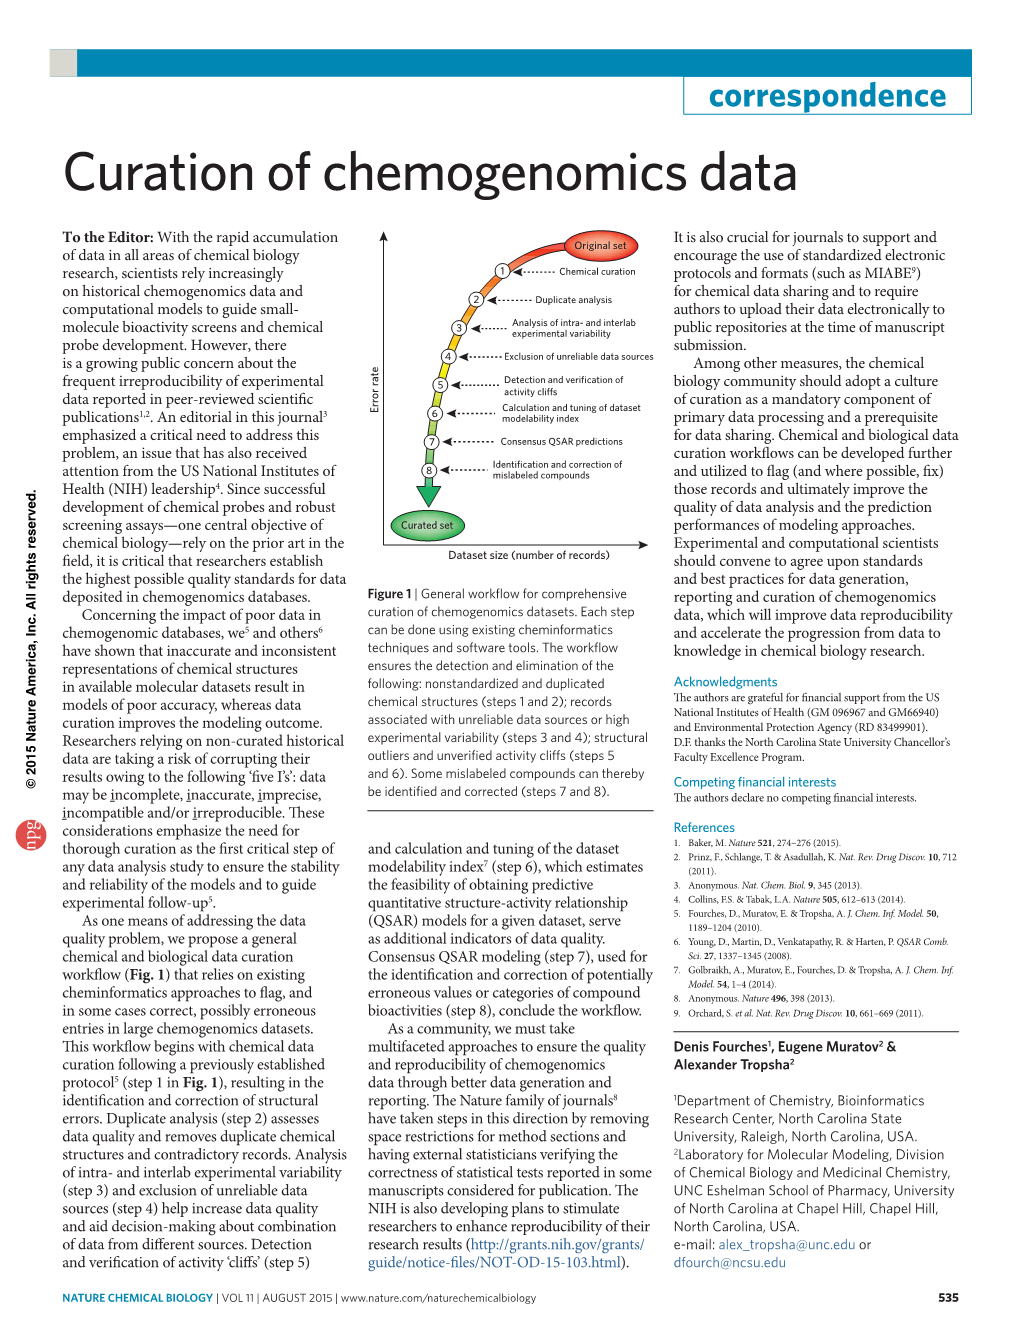 Curation of Chemogenomics Data